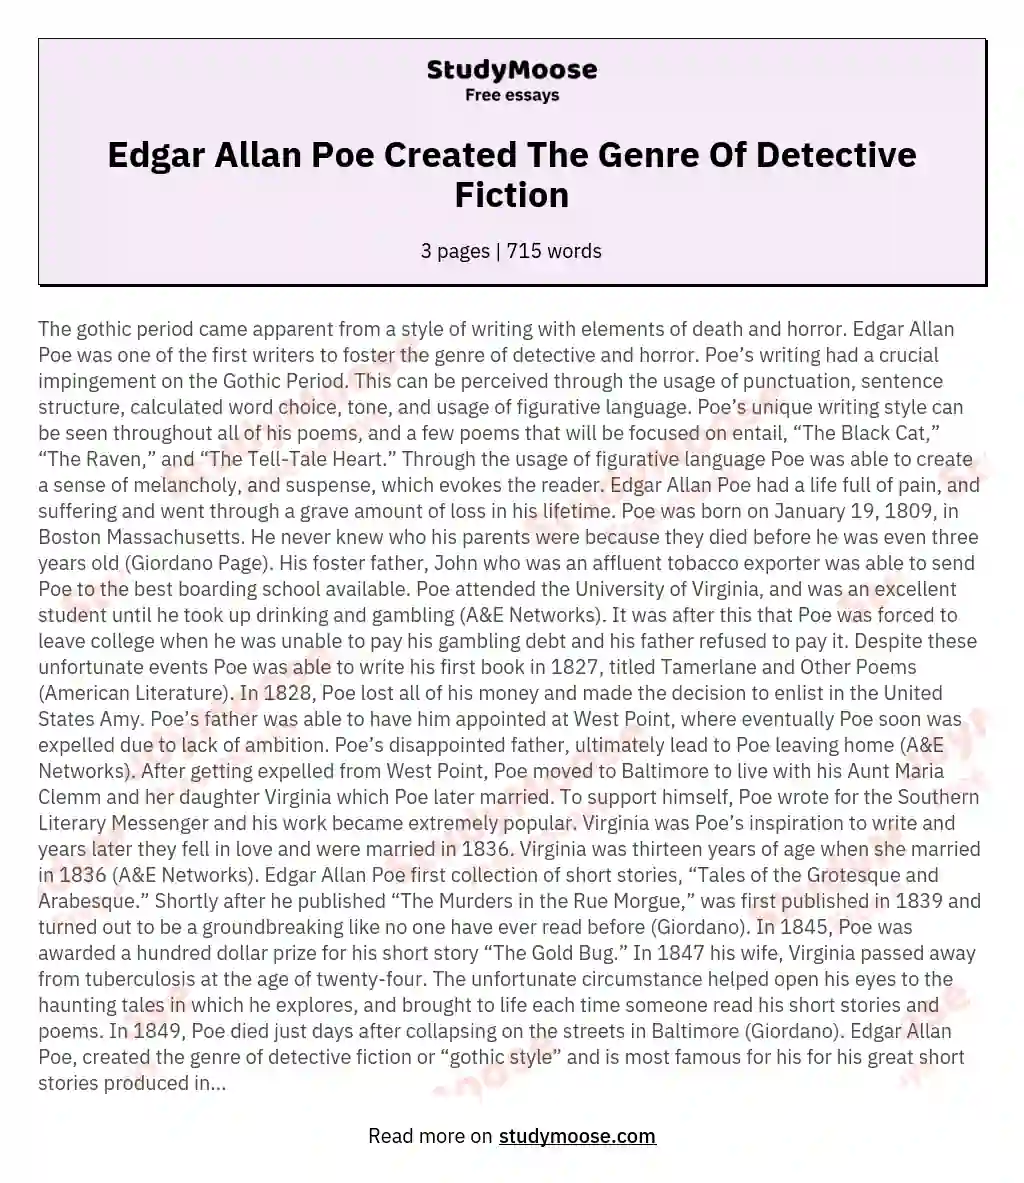 Edgar Allan Poe Created The Genre Of Detective Fiction essay